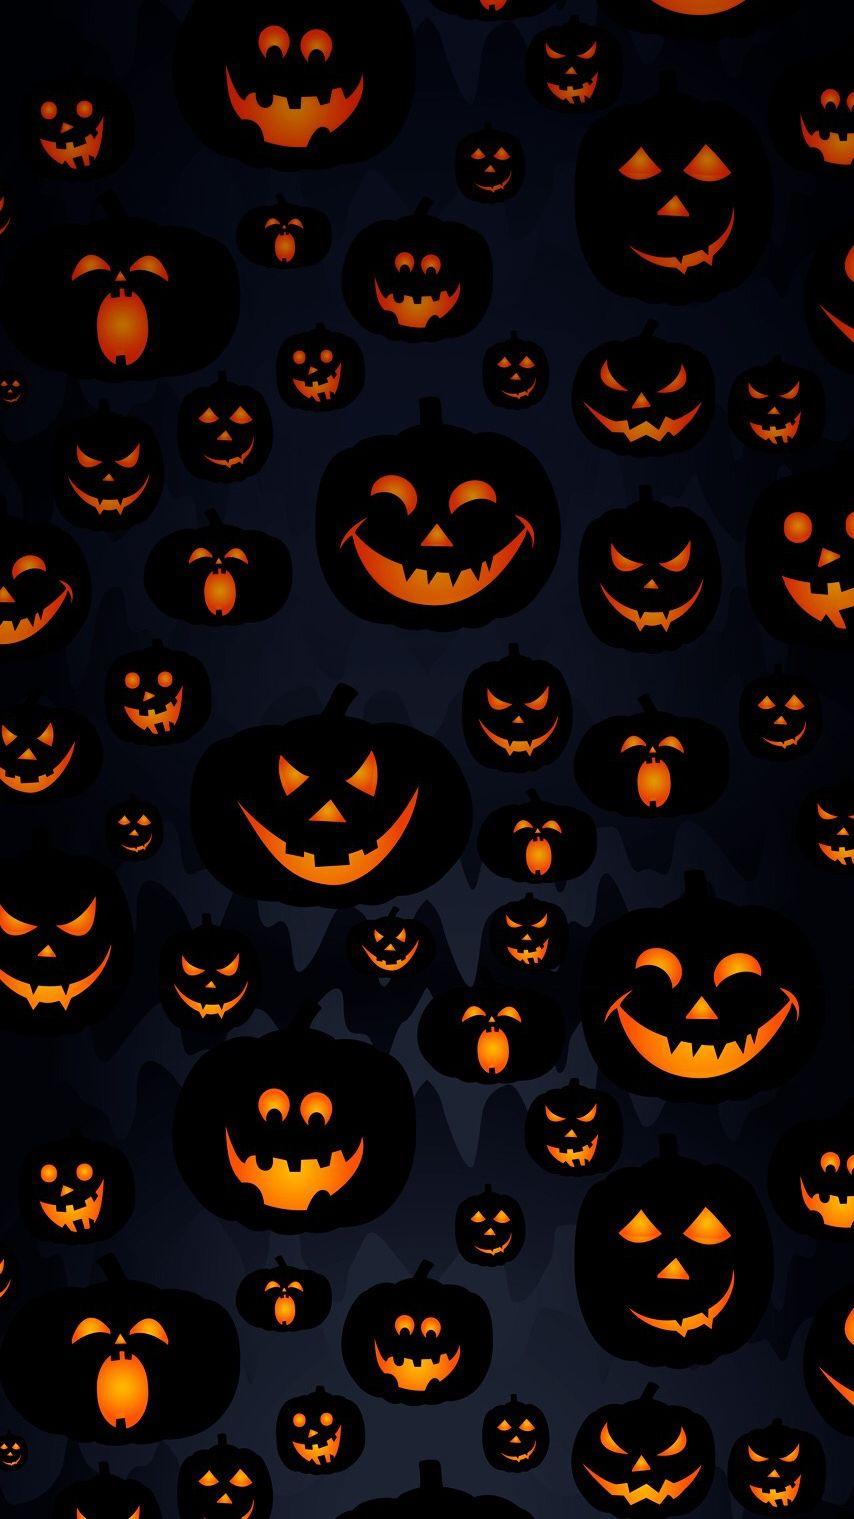 Scary Halloween pumpkins on a dark background. - Halloween